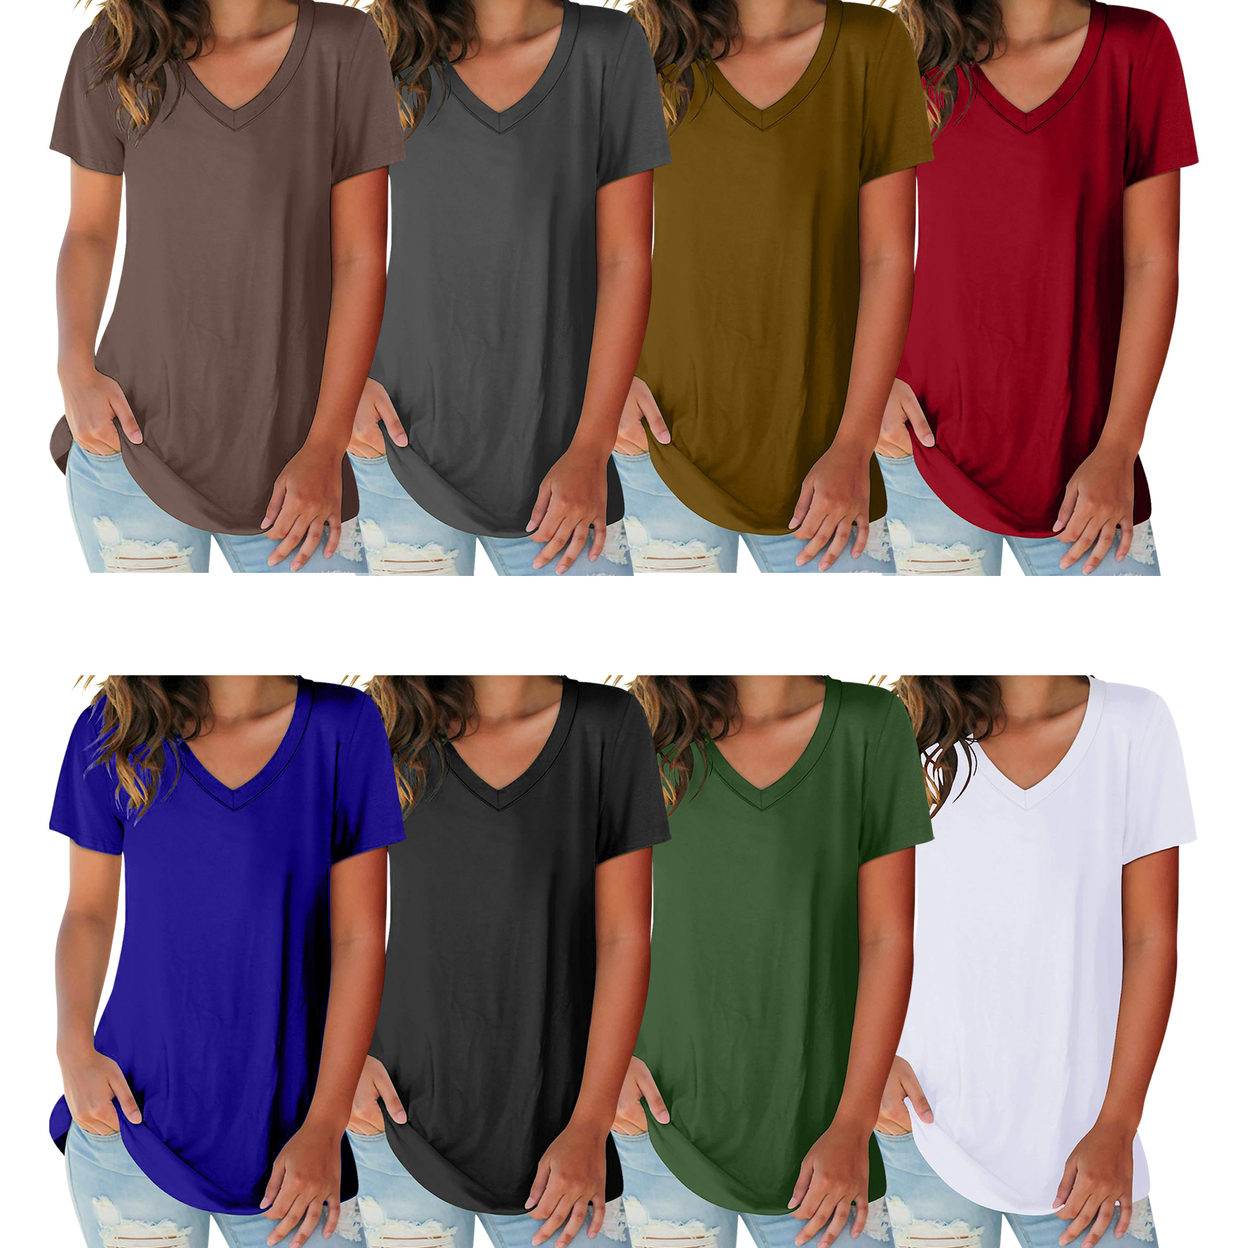 3-Pack: Women's Ultra Soft Smooth Cotton Blend Basic V-Neck Short Sleeve Shirts - Black, Navy, Grey, Large